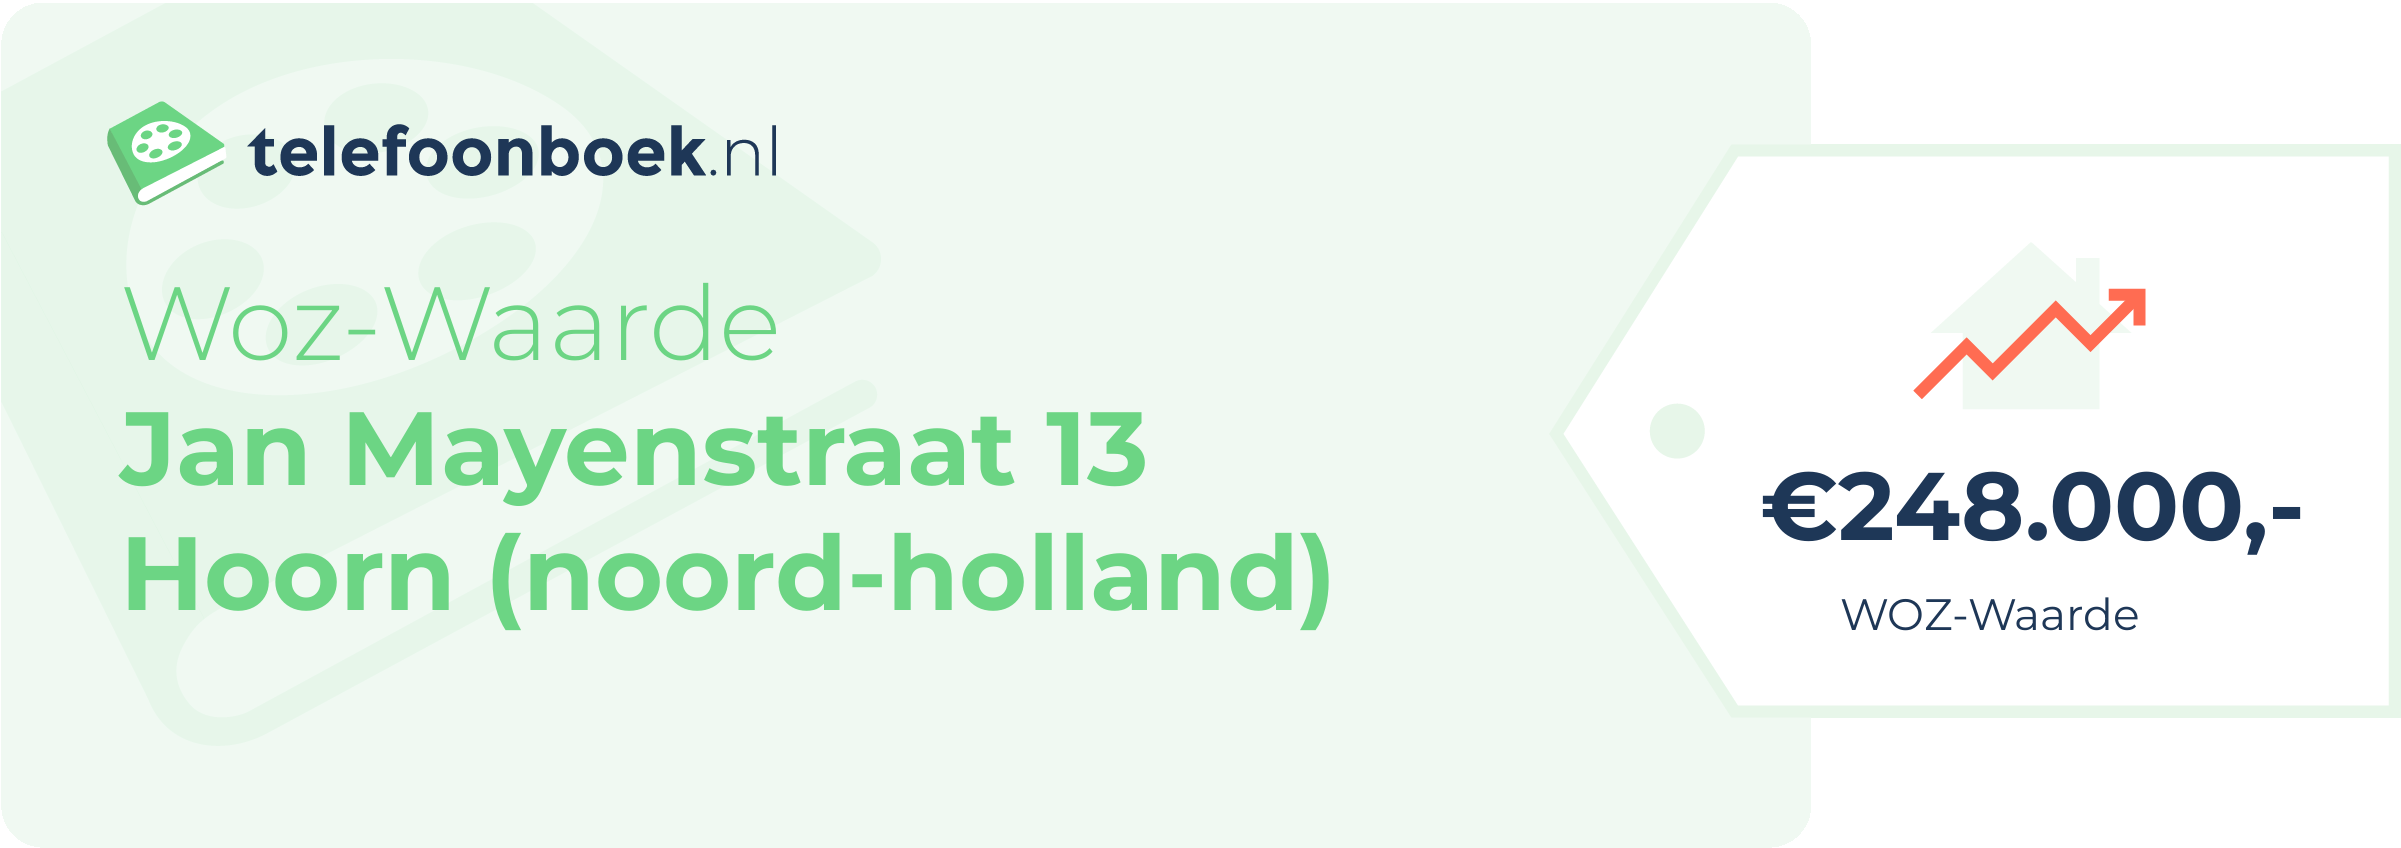 WOZ-waarde Jan Mayenstraat 13 Hoorn (Noord-Holland)